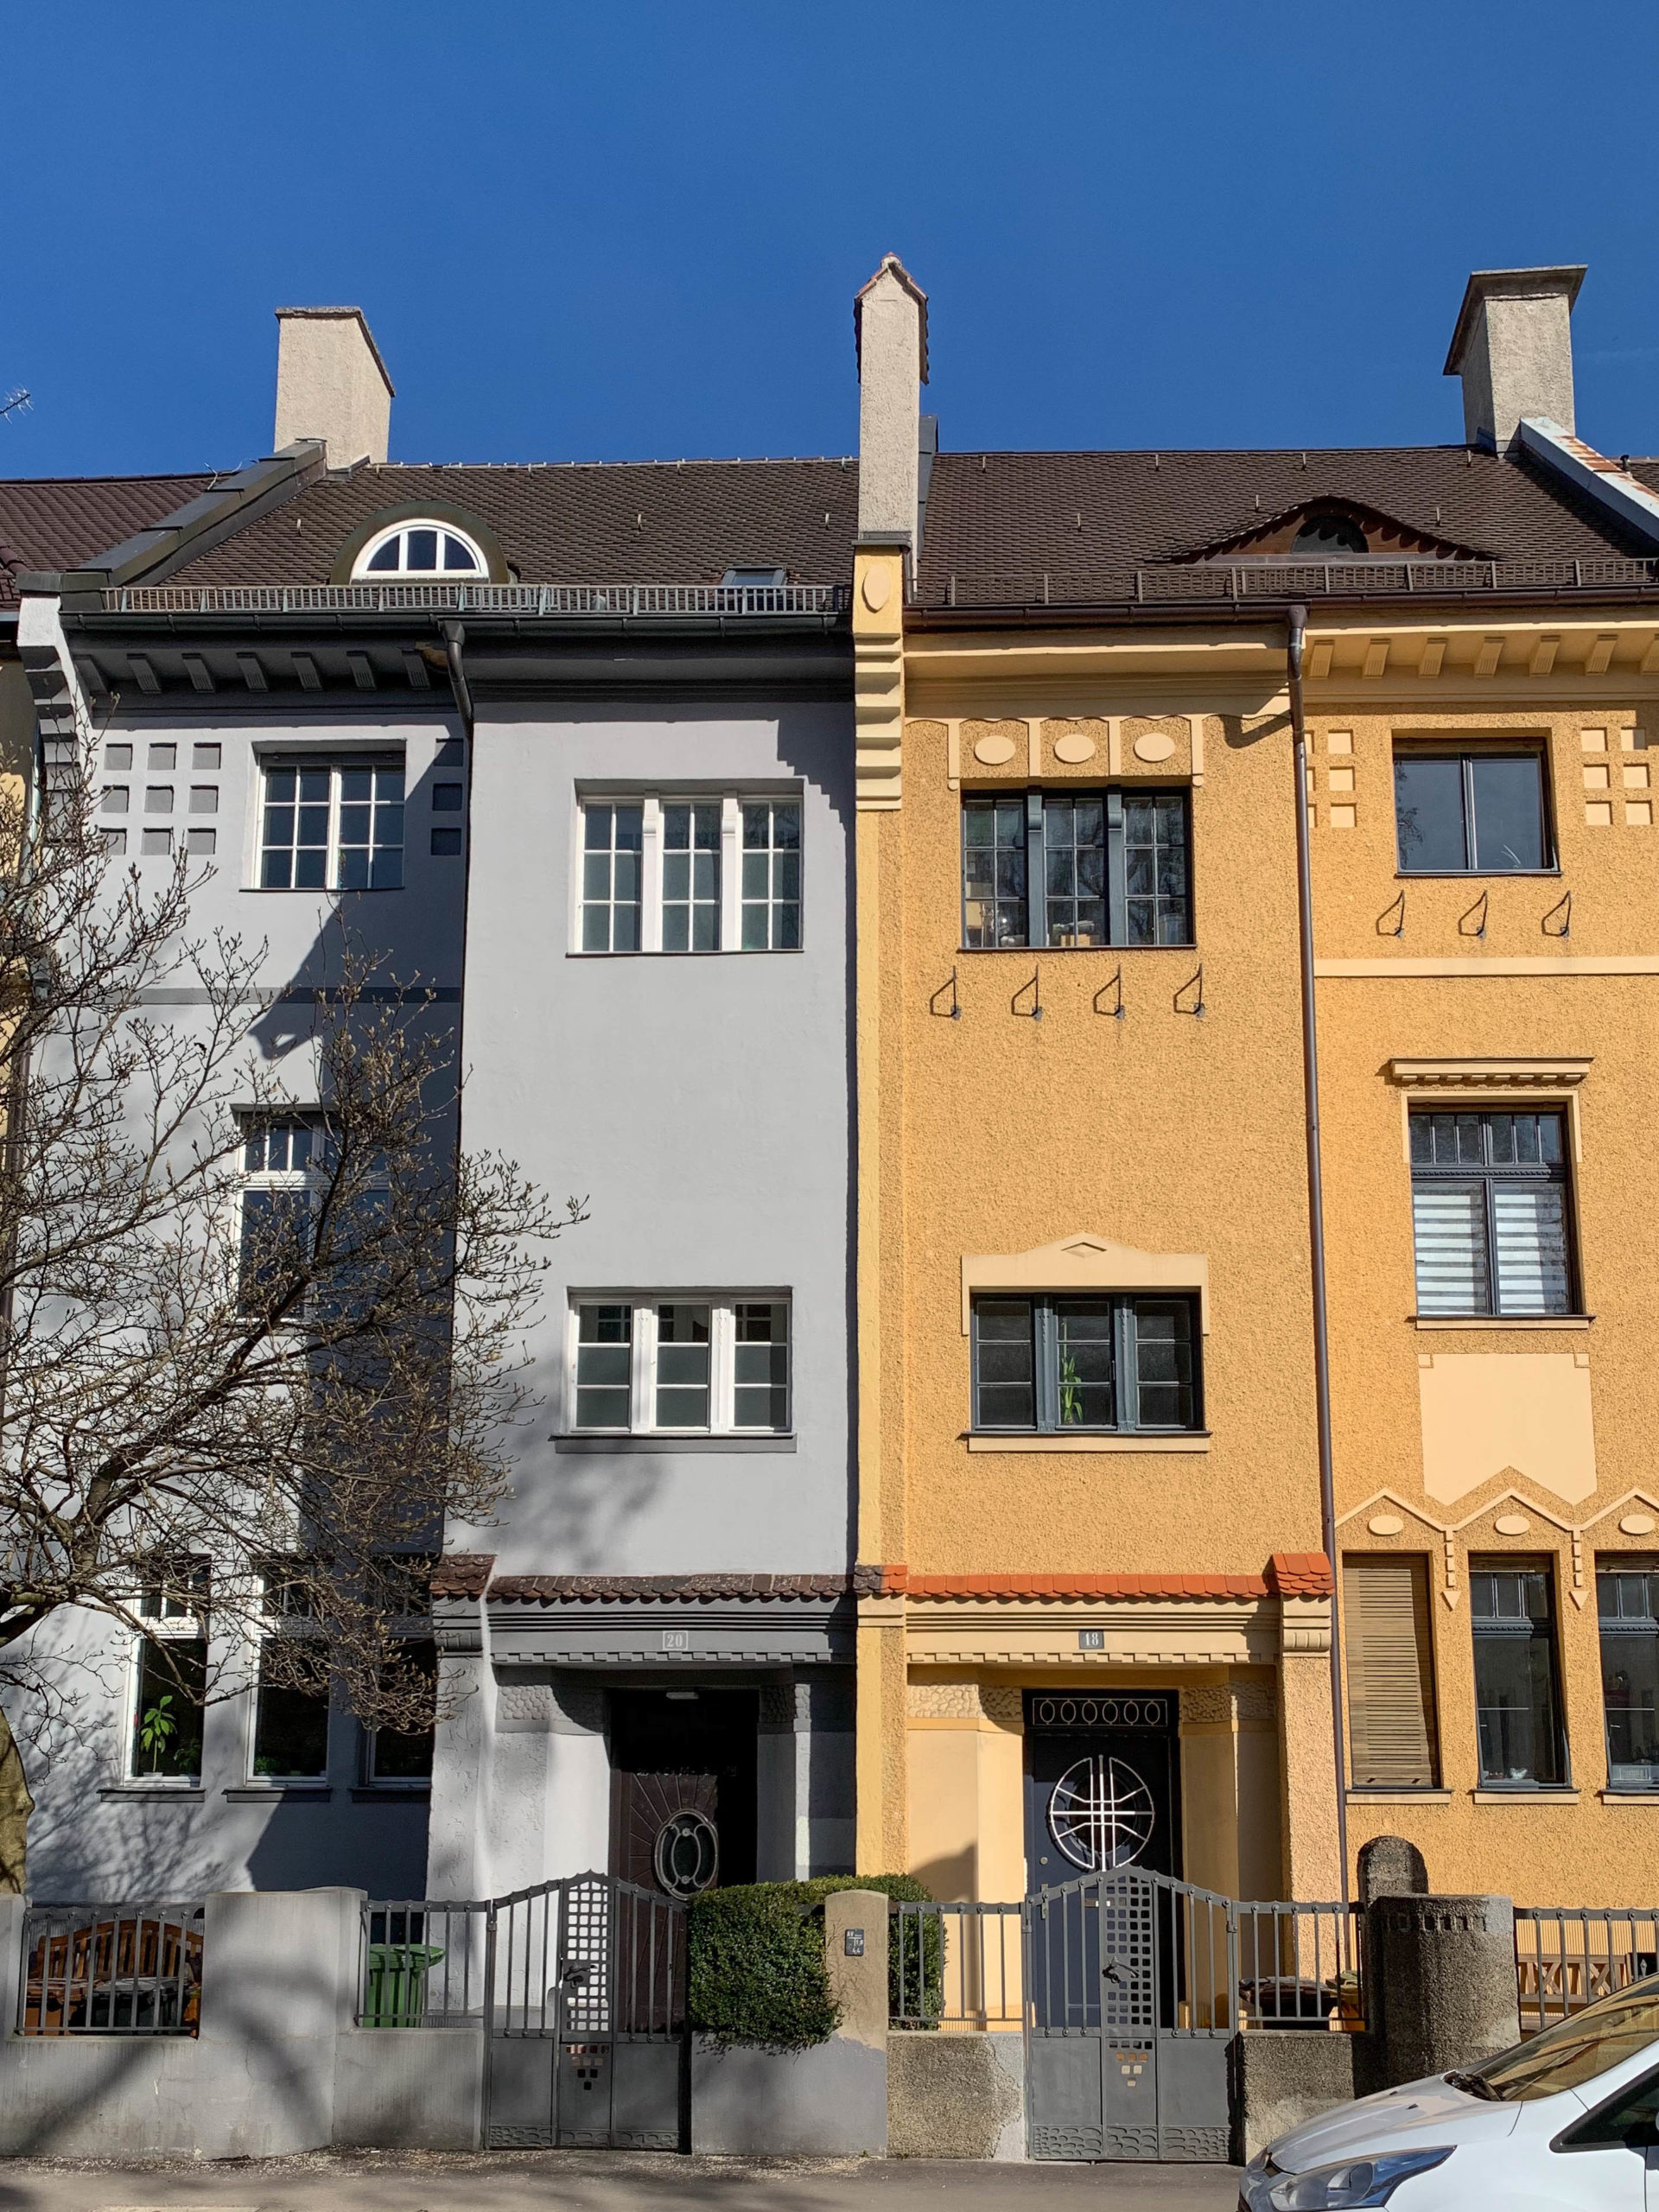 Terraced houses, 1905. Architects: Walter Krauss, Herrmann Dürr